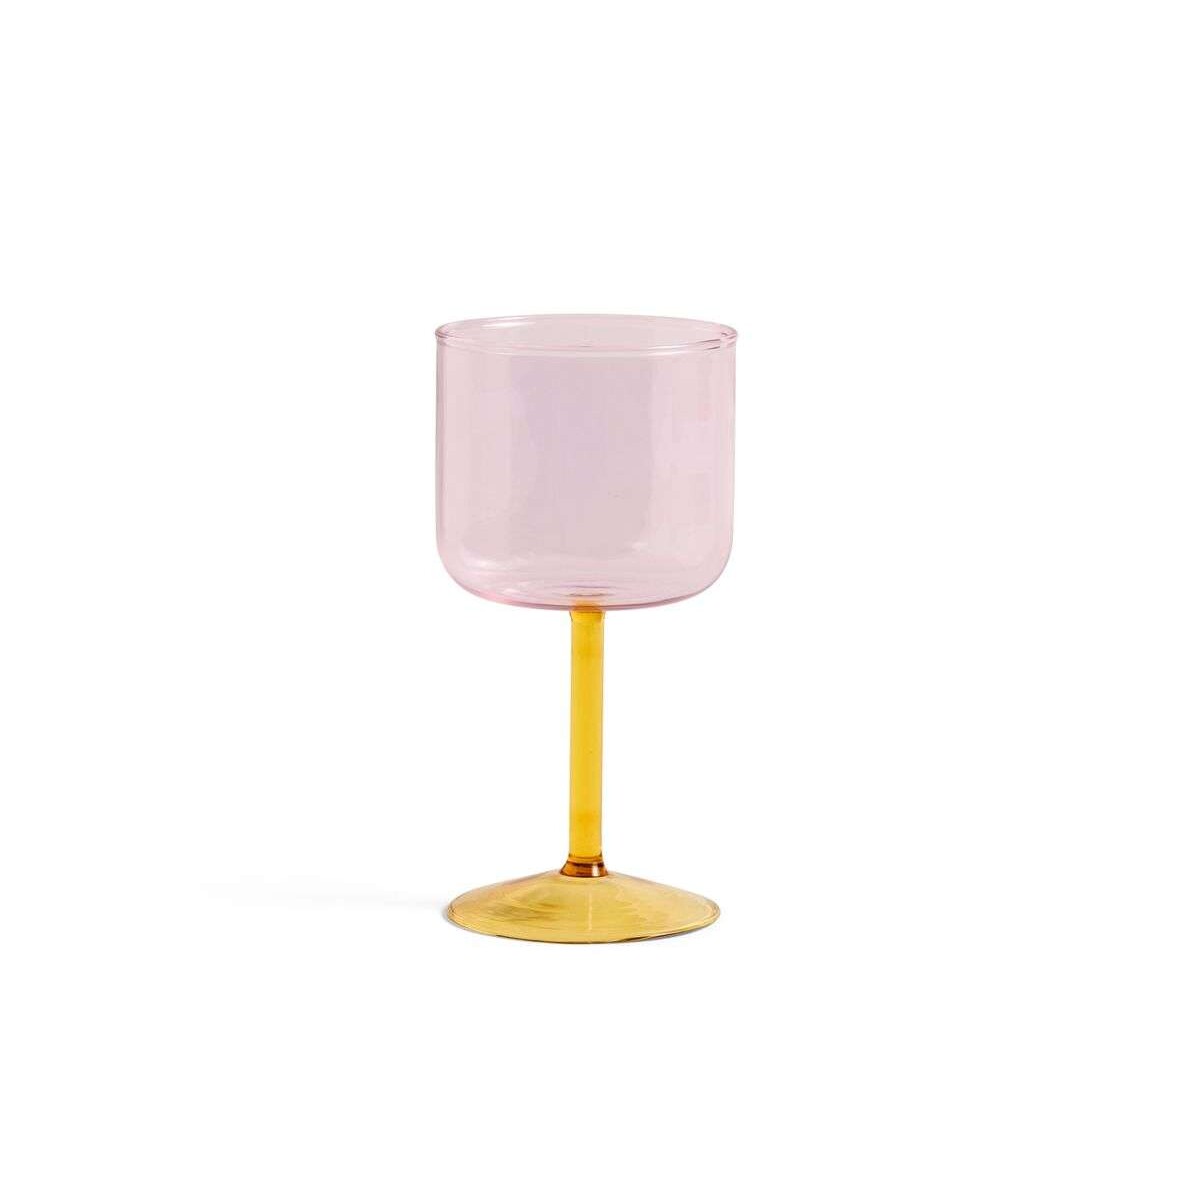 Tint Wine Glass Set of 2 Pink/Yellow - HAY